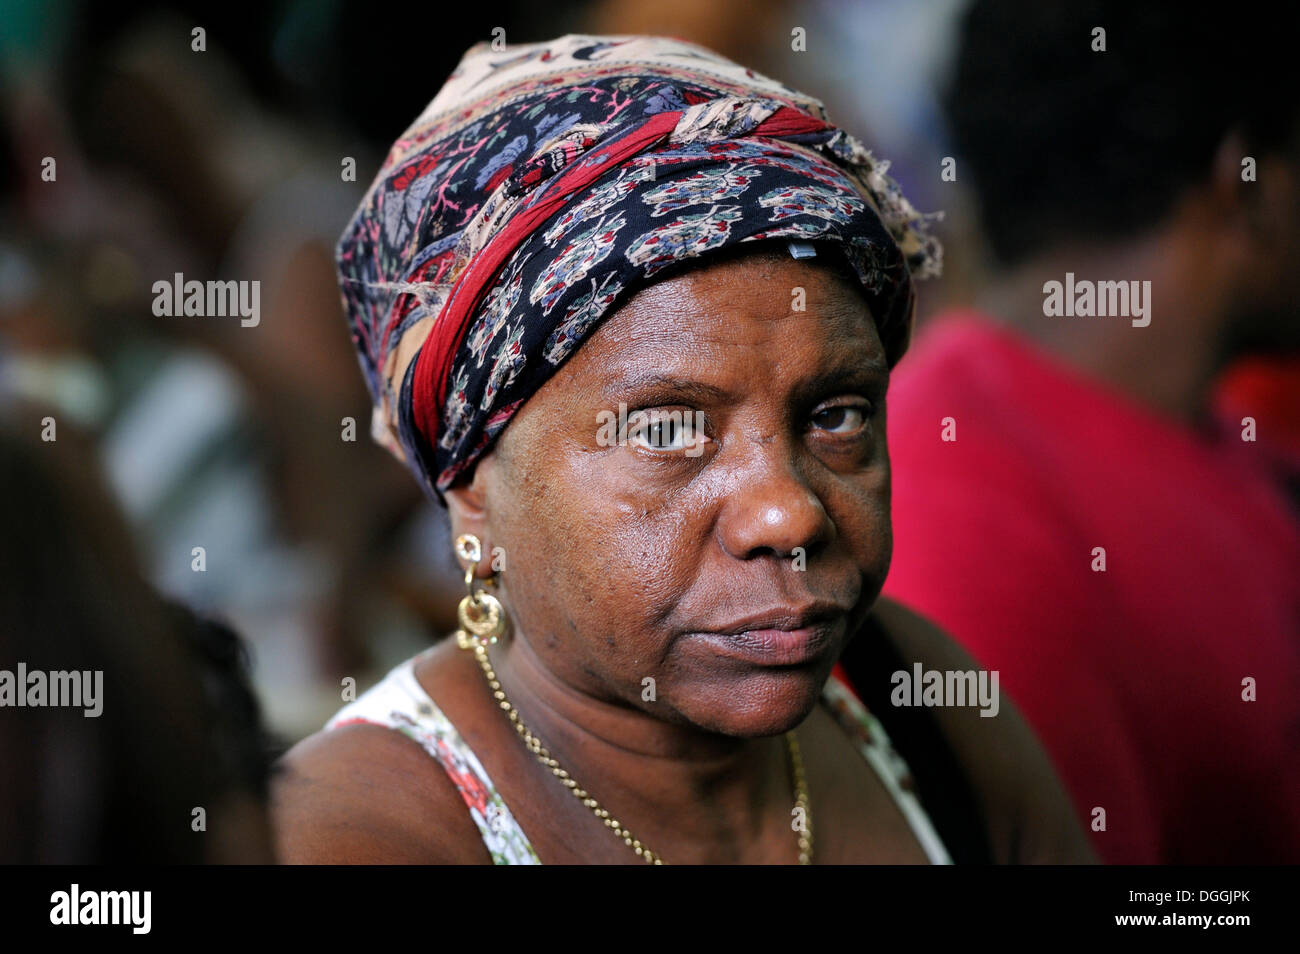 African-Brazilian woman with a headscarf, portrait, Rio de Janeiro, Brazil, South America Stock Photo